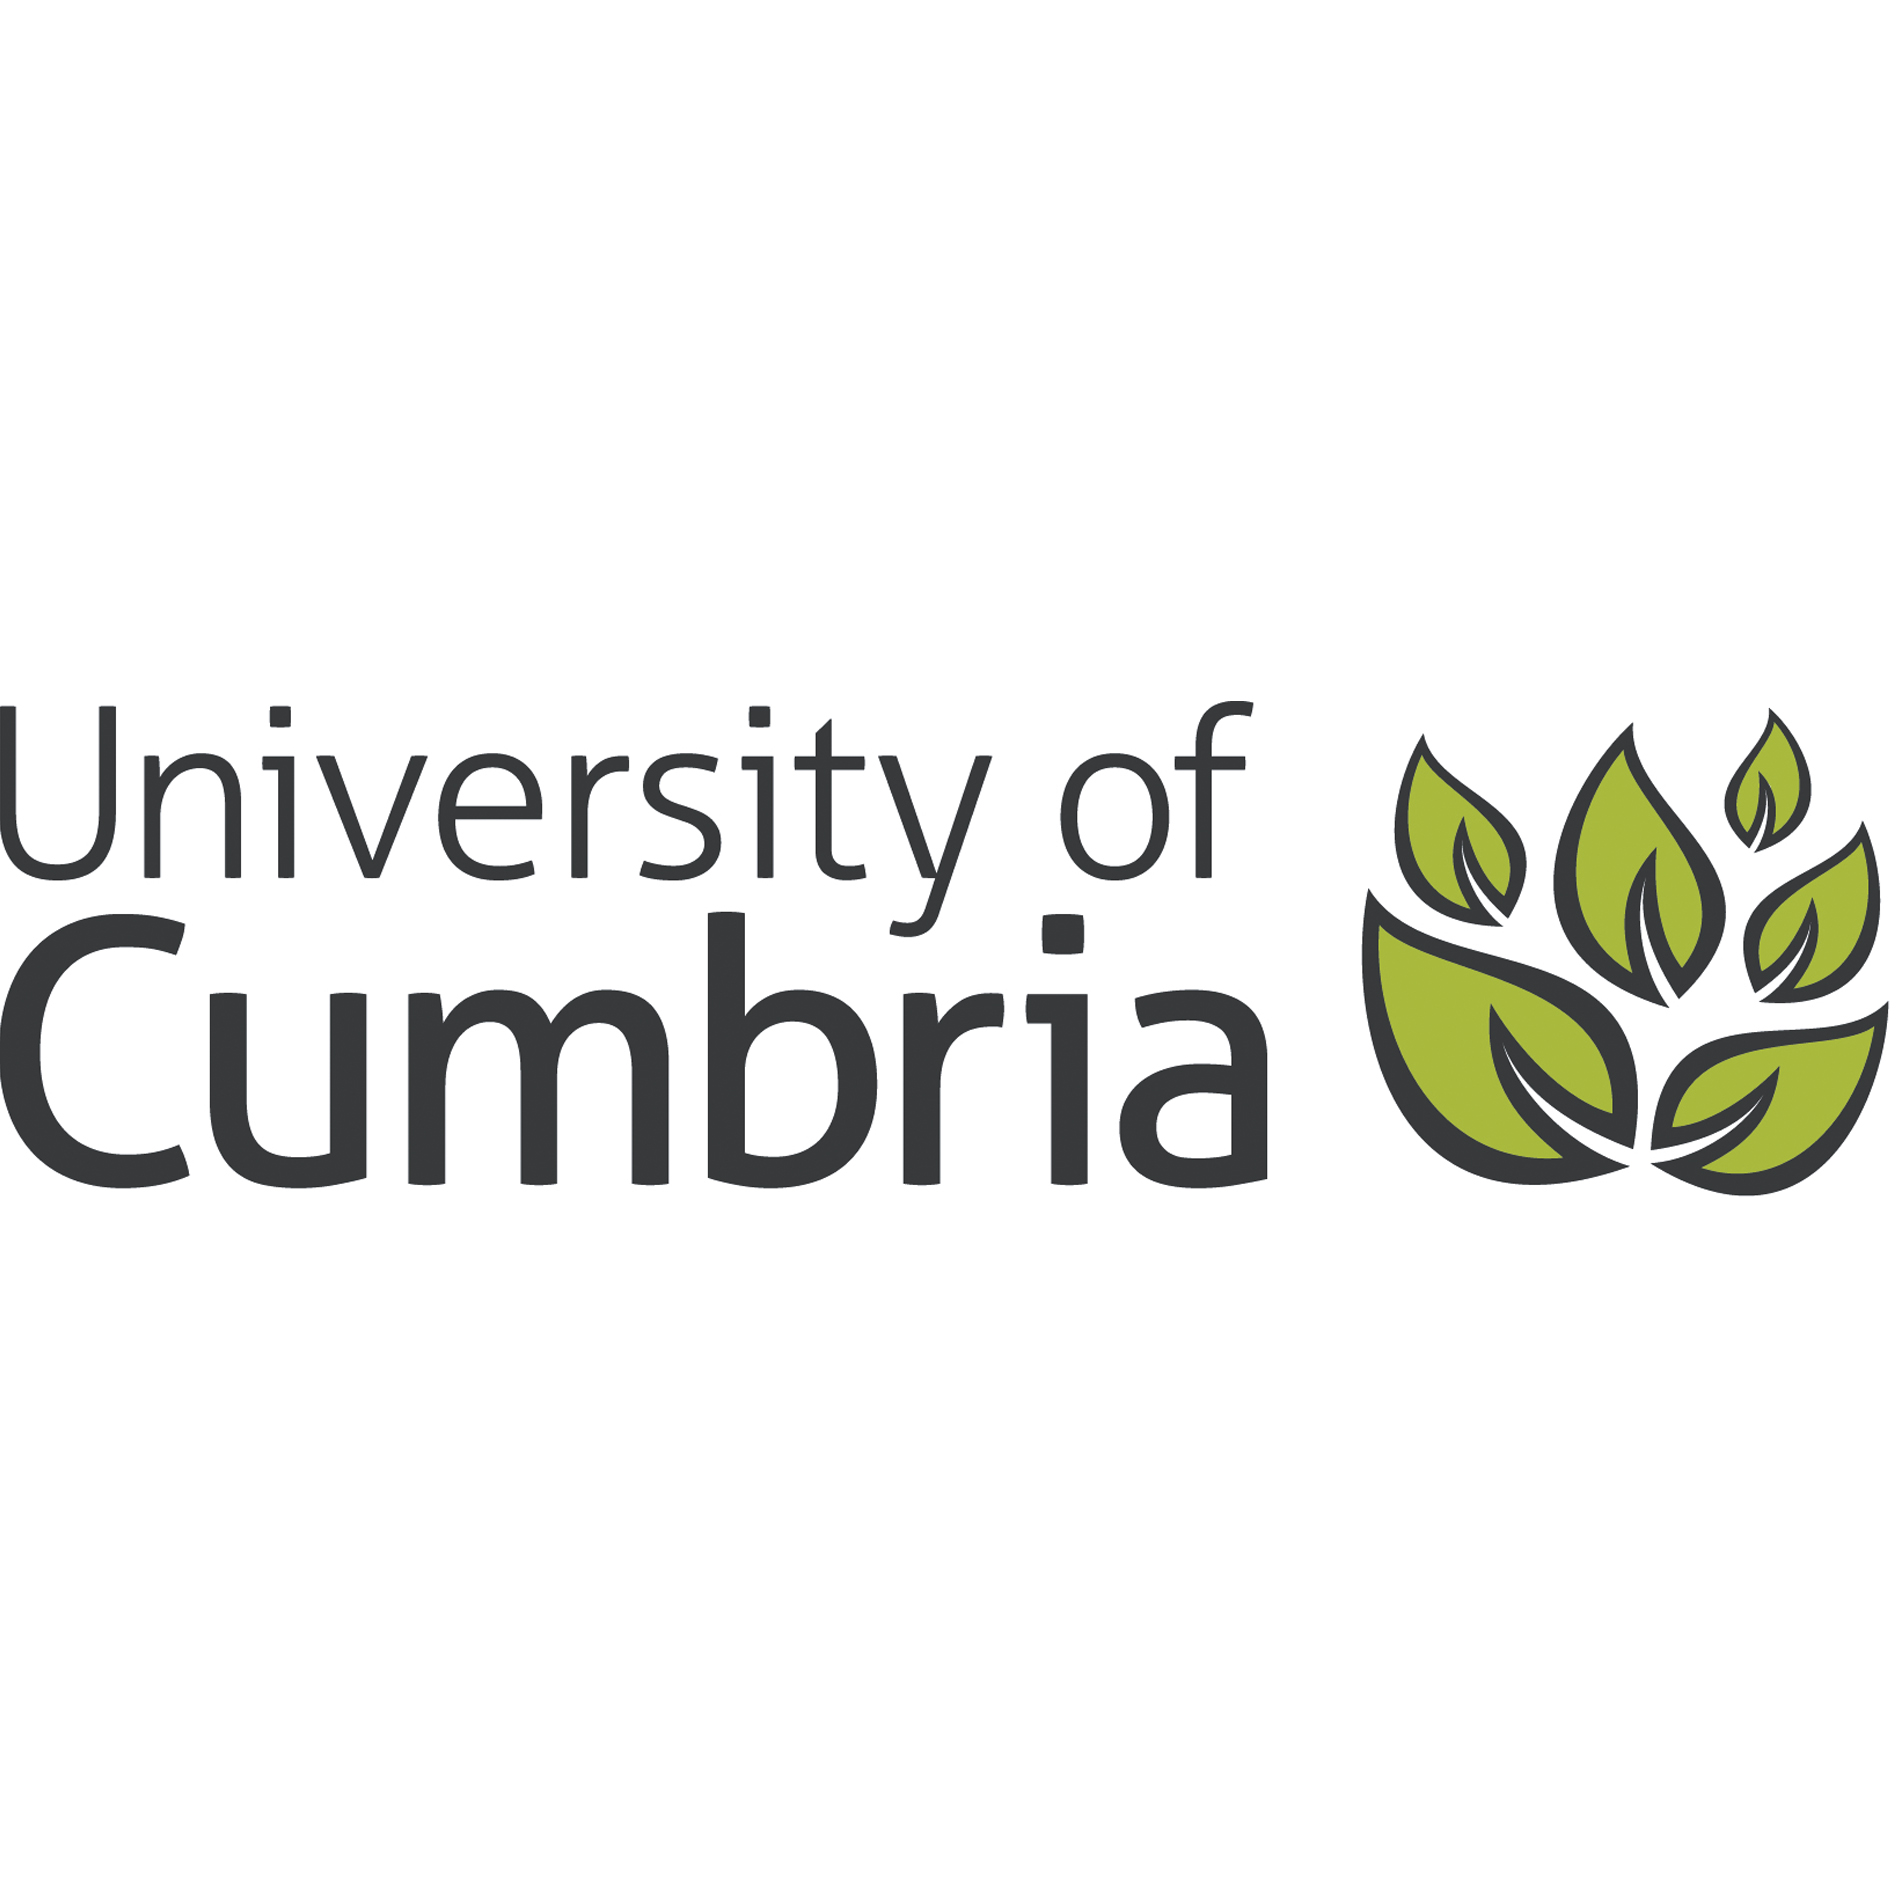 Our Client - University of Cumbria